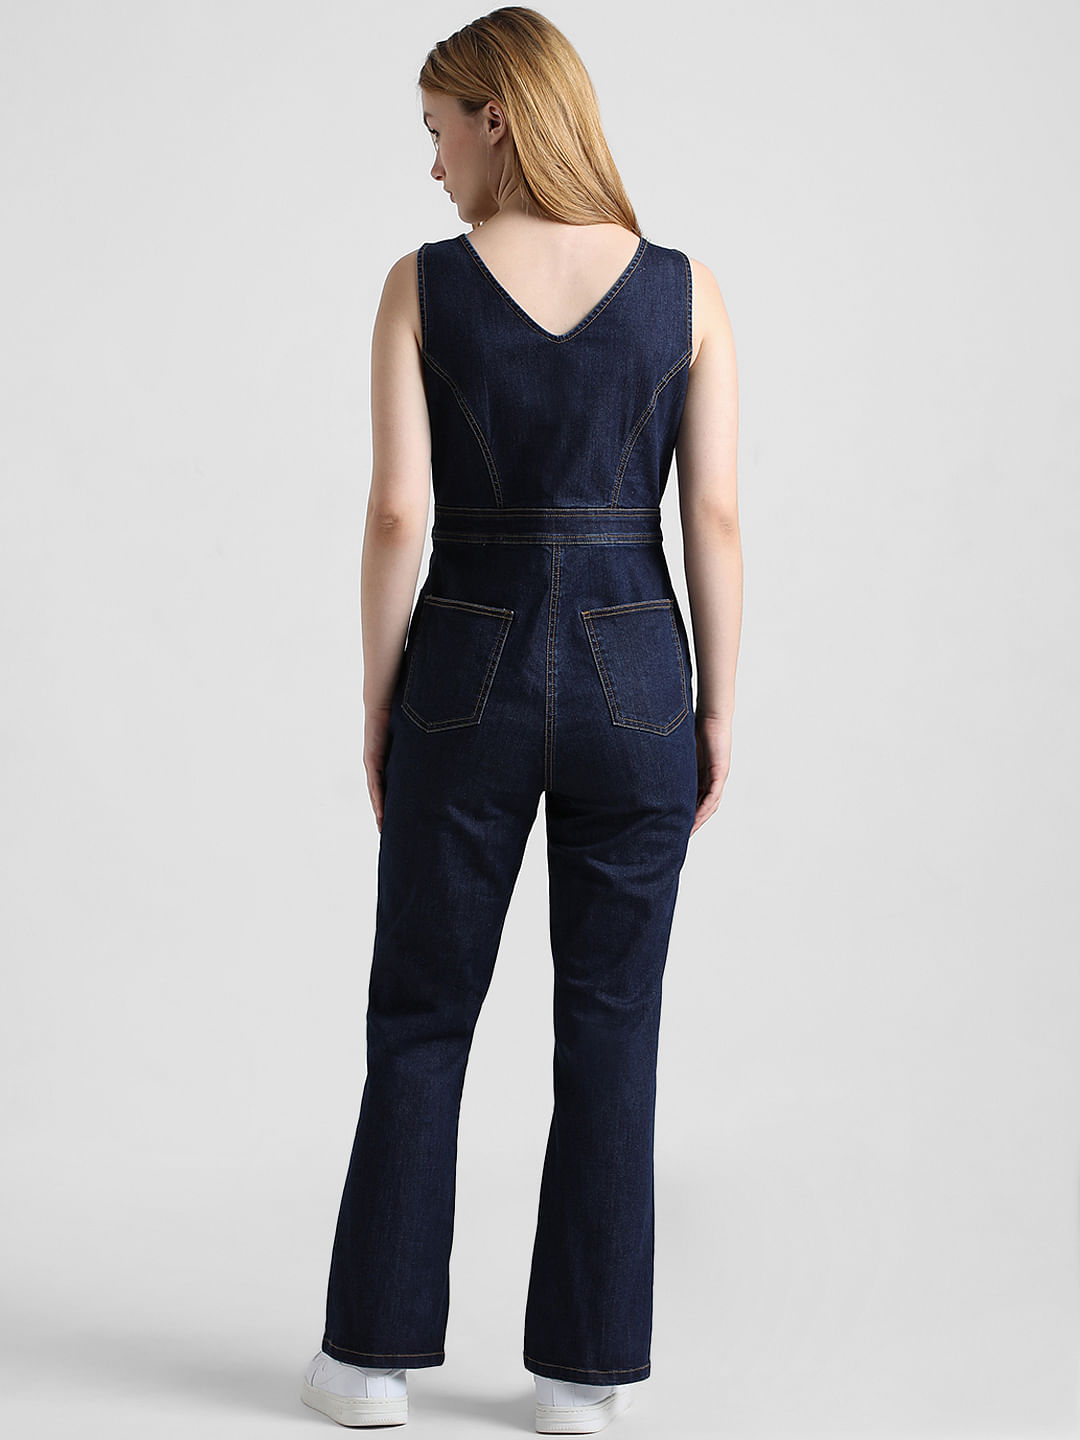 Womens Casual High Halter Neck Sleeveless Summer Dark Blue Denim Jumpsuit  S-XL | eBay